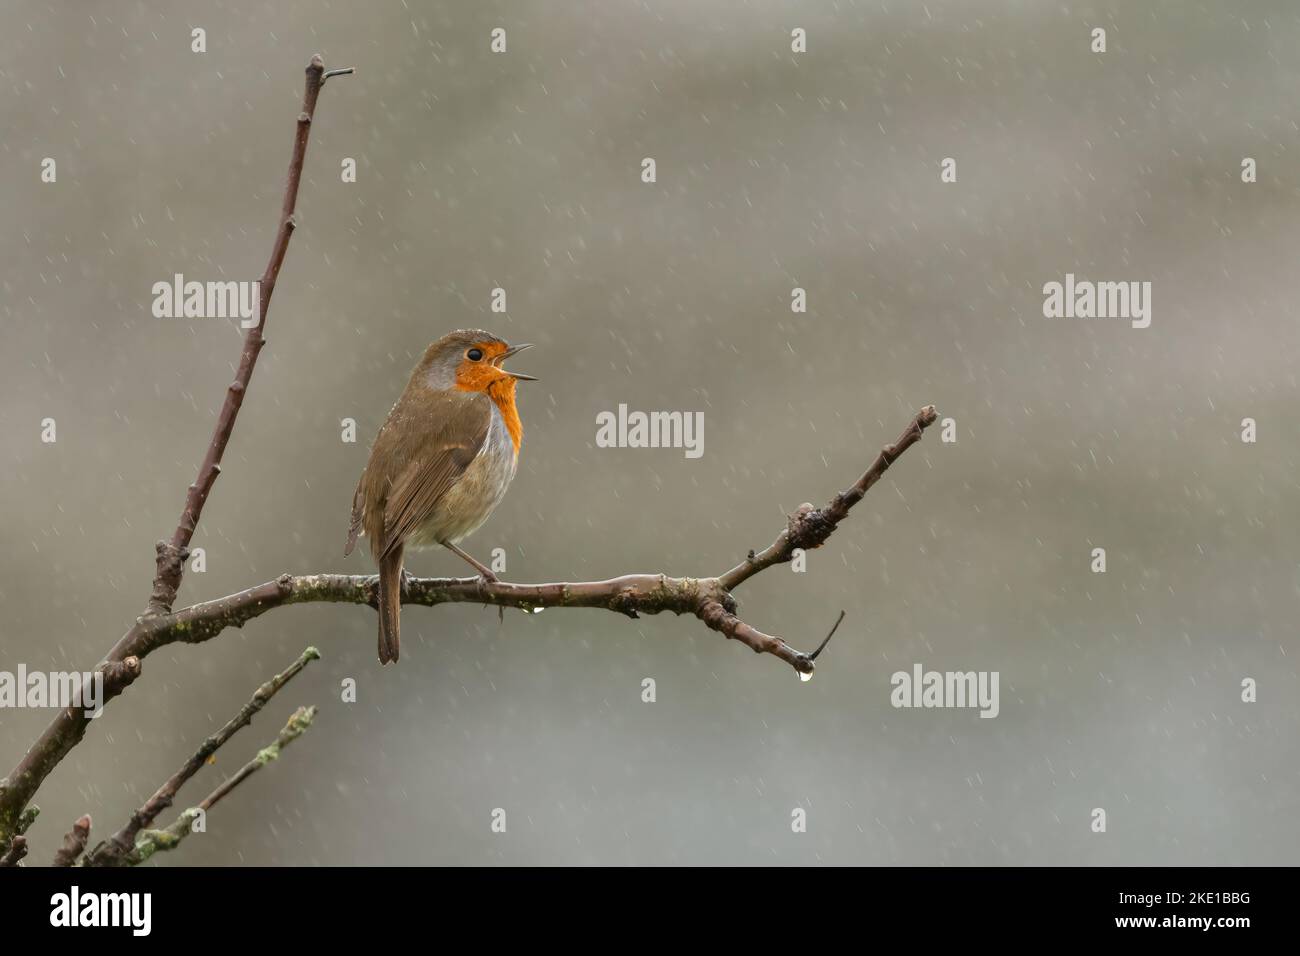 Petirrojo europeo cantando bajo la lluvia. Lindo retrato de pájaro británico Foto de stock